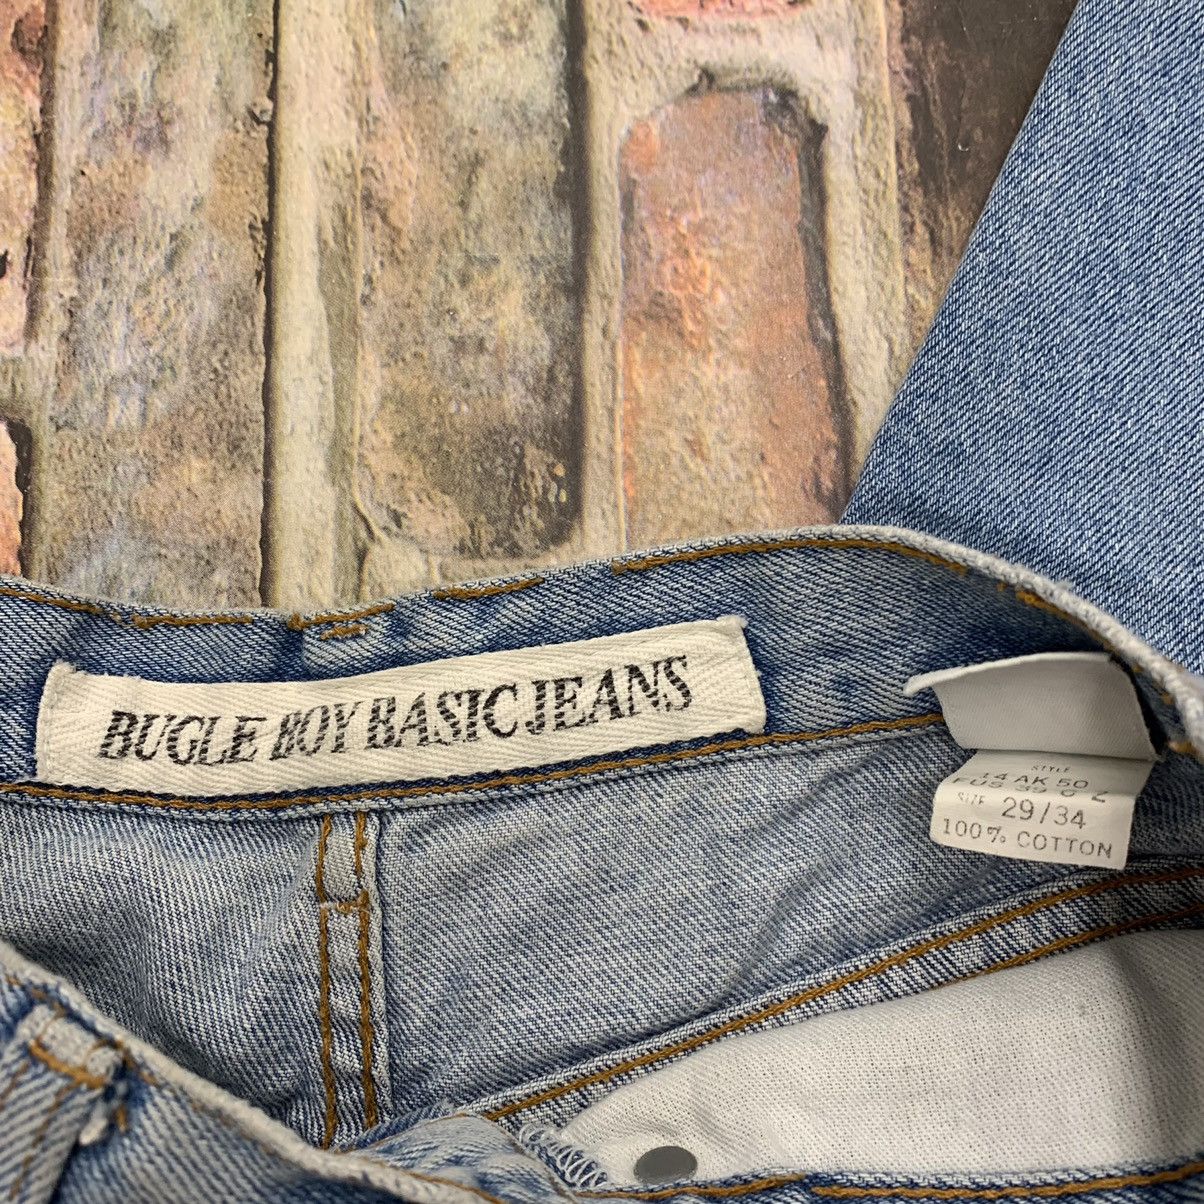 Vintage Vintage Bugle Boy jeans Size US 29 - 5 Preview